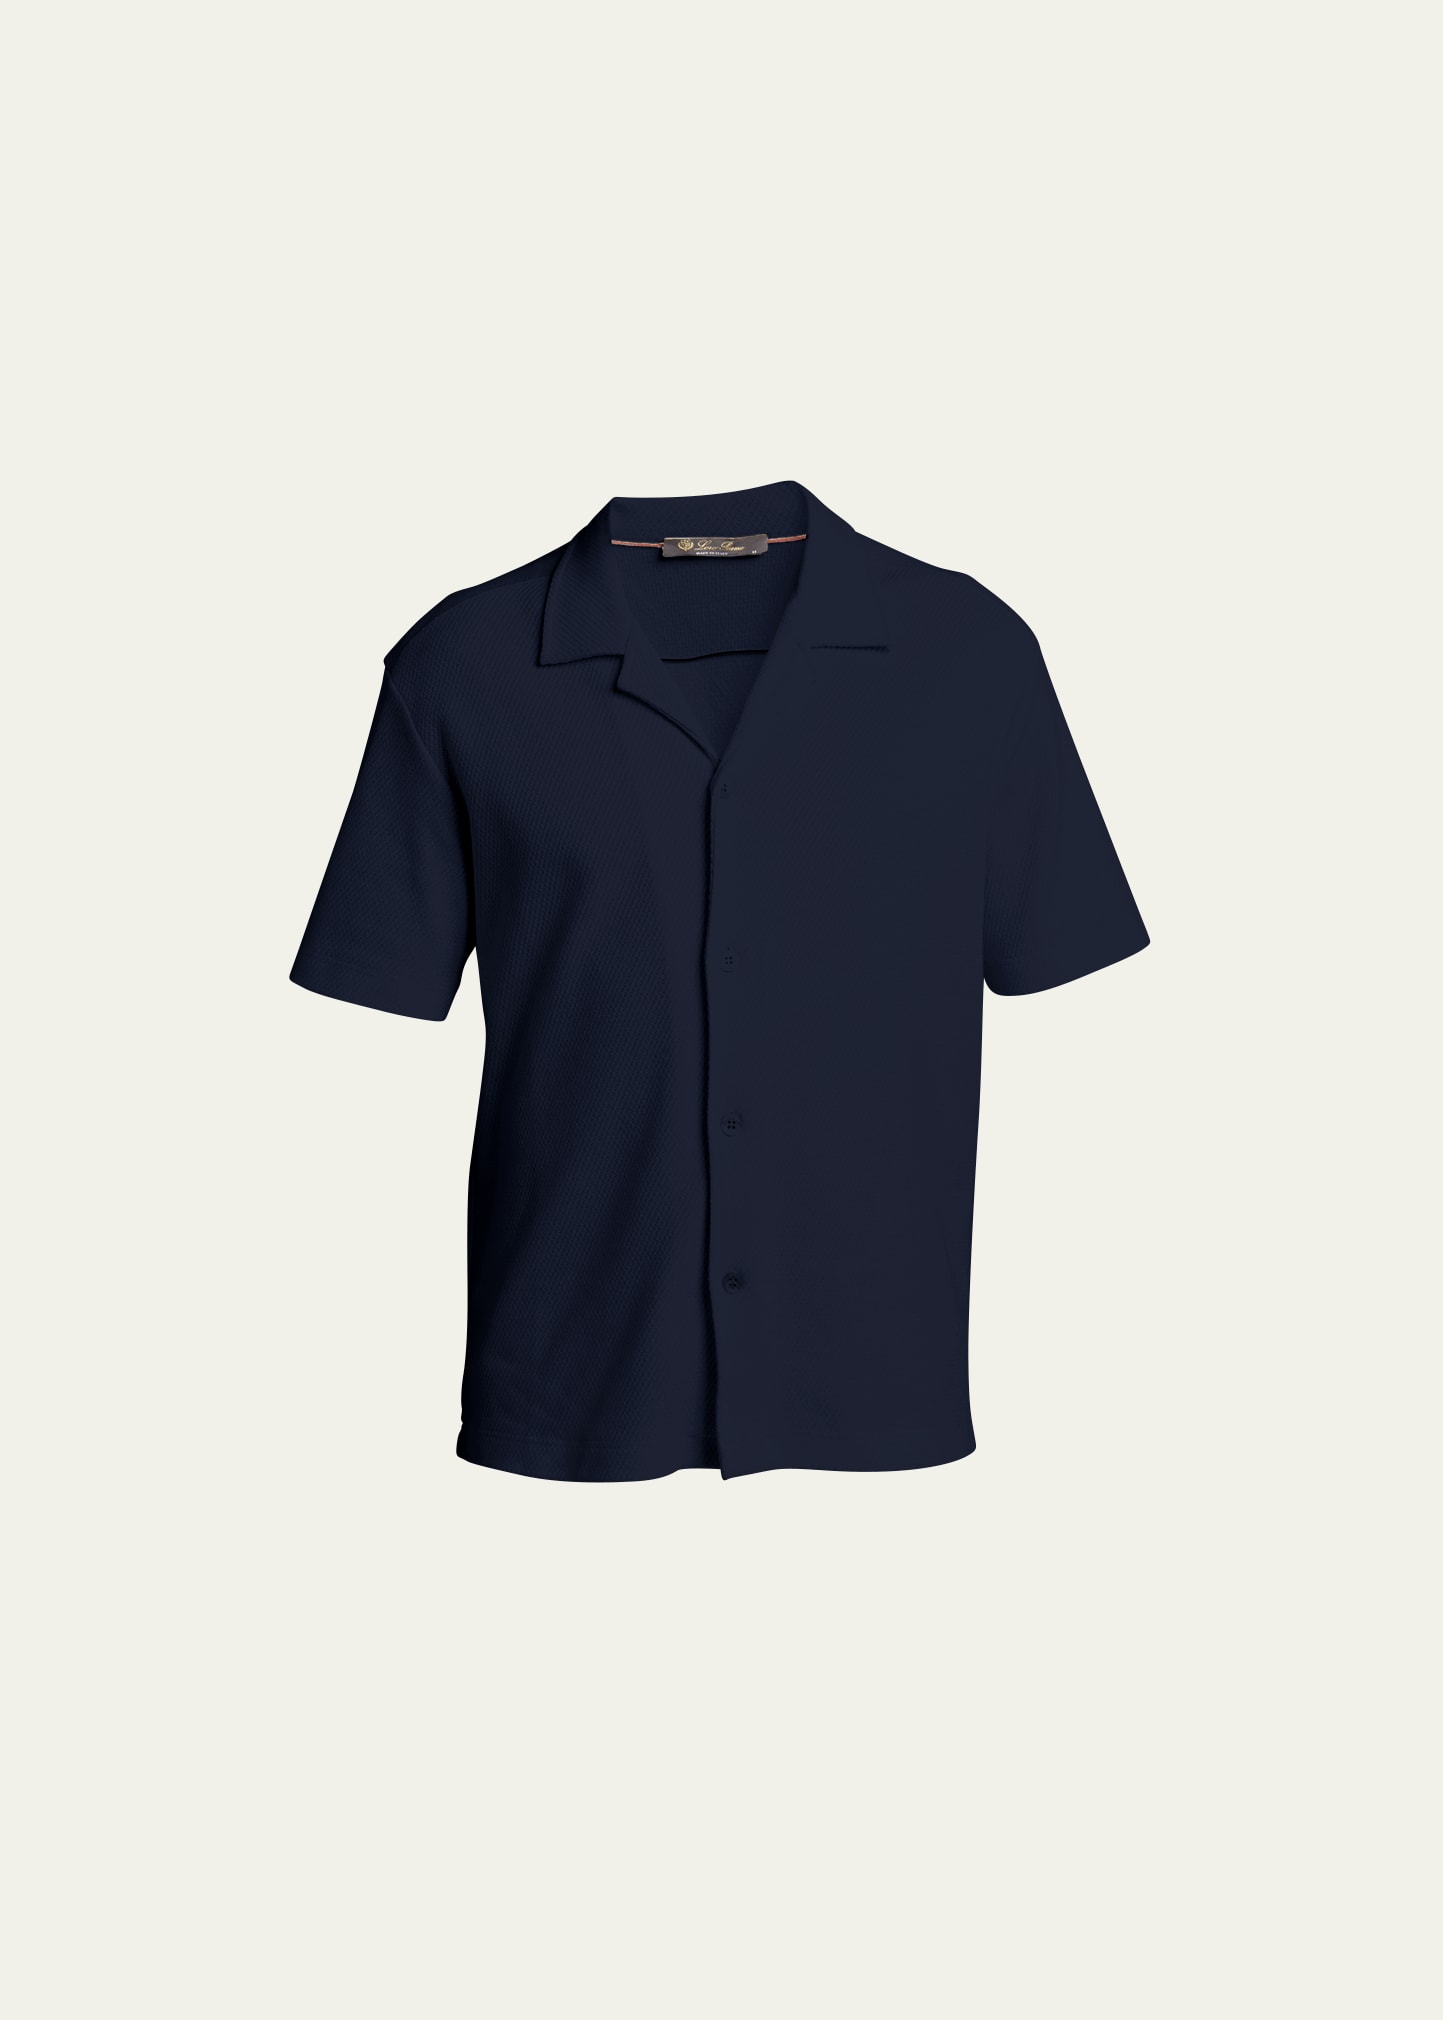 Loro Piana Men's Camicia Cotton-silk Camp Shirt In Blue Navy